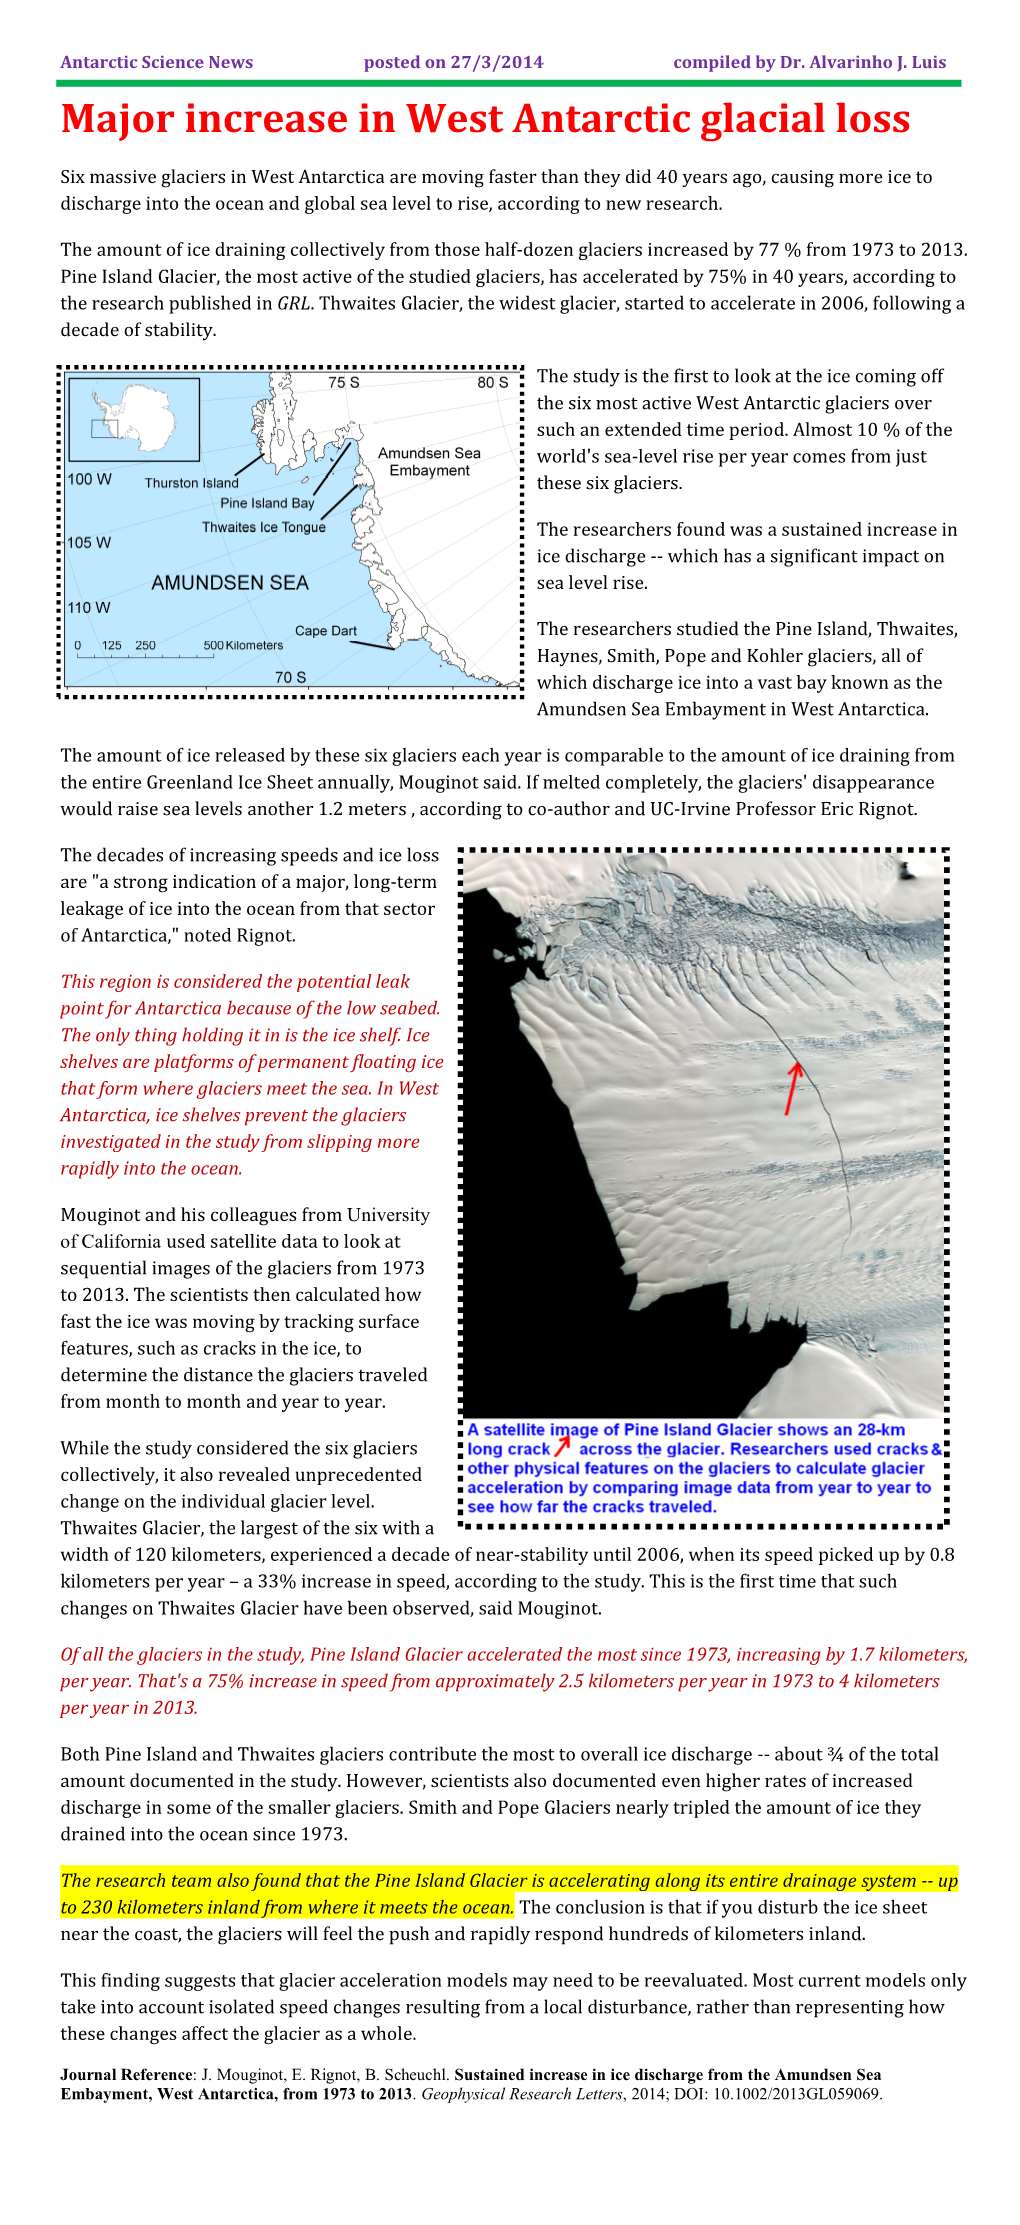 Major Increase in West Antarctic Glacial Loss